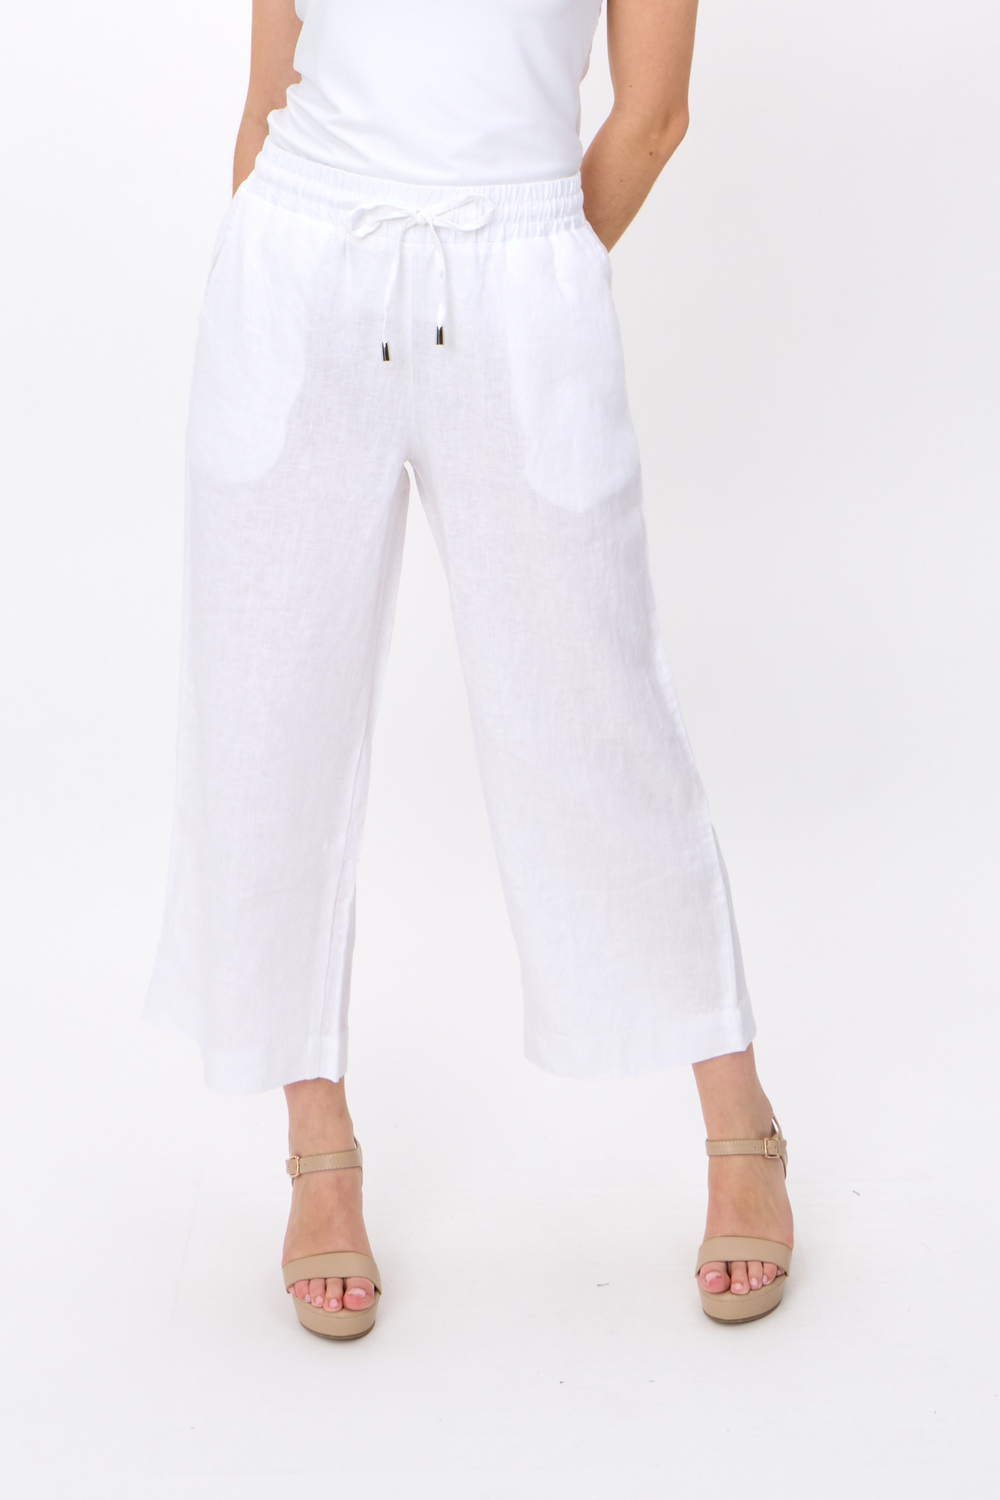 Pantalon capri à jambes larges modèle 24253. Blanc